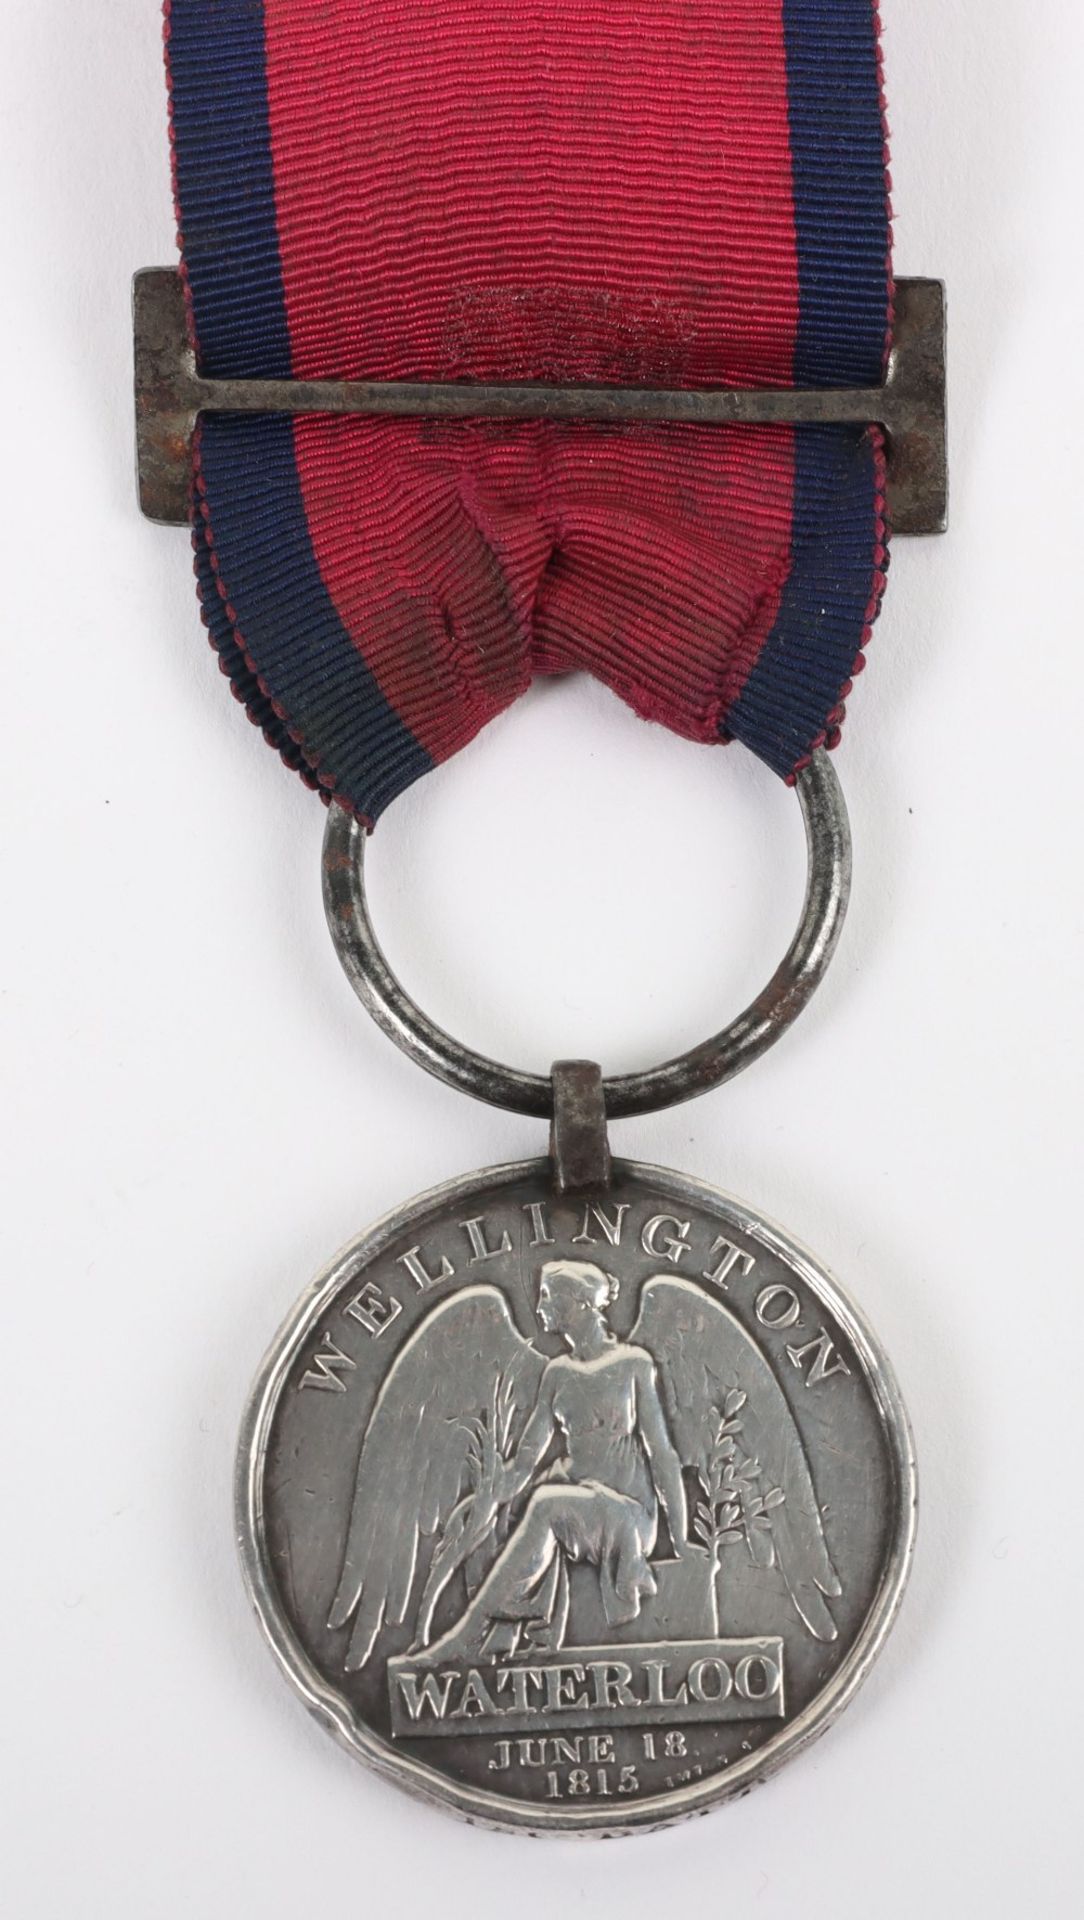 British 1815 Waterloo Medal 4th or Kings Own Regiment of Foot - Image 4 of 5